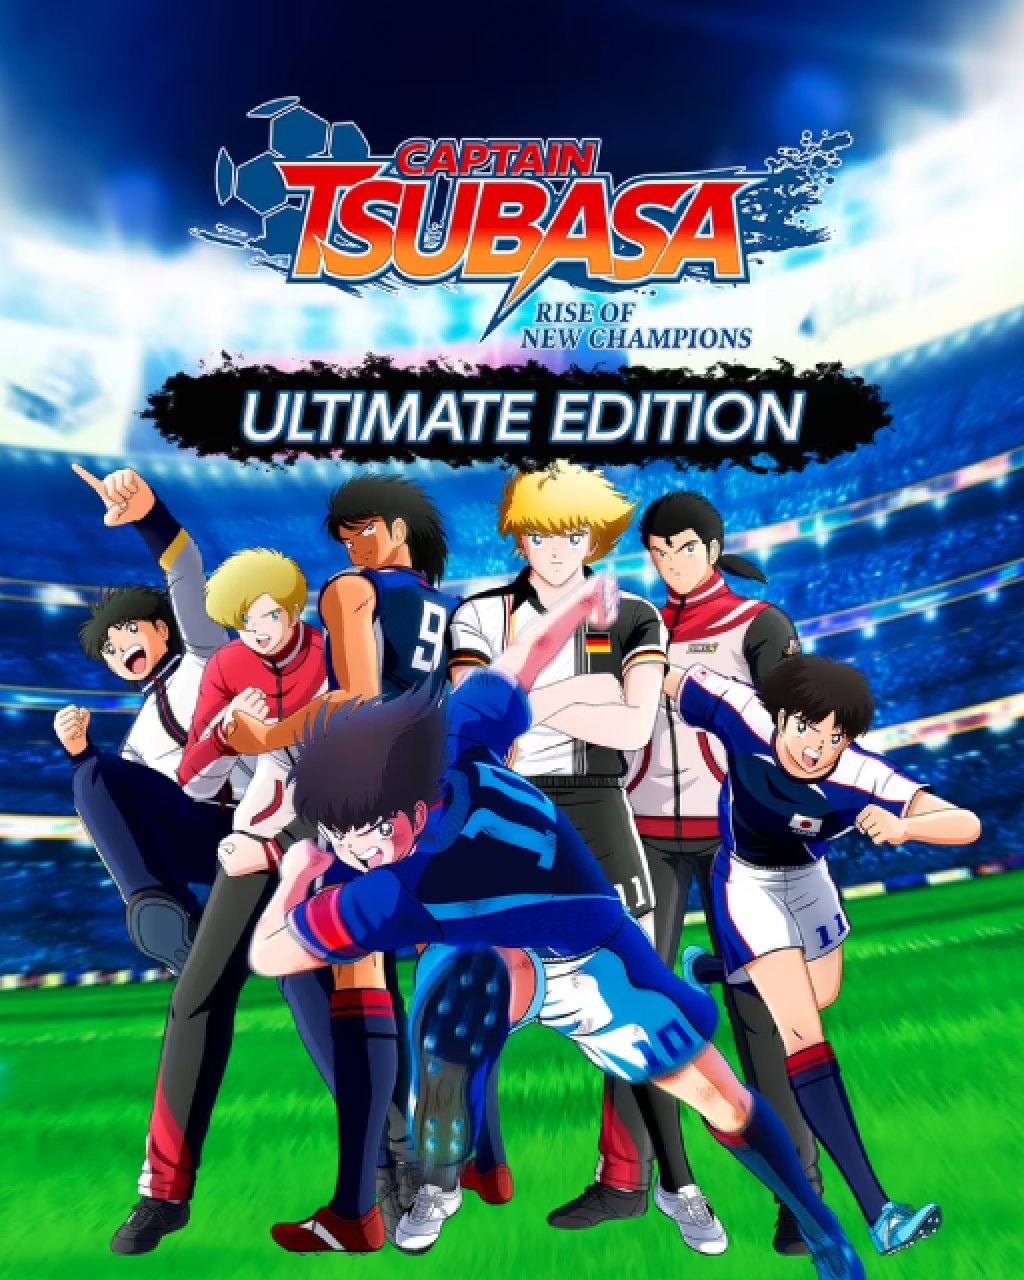 Captain Tsubasa Rise of New Champions Ultimate Edition